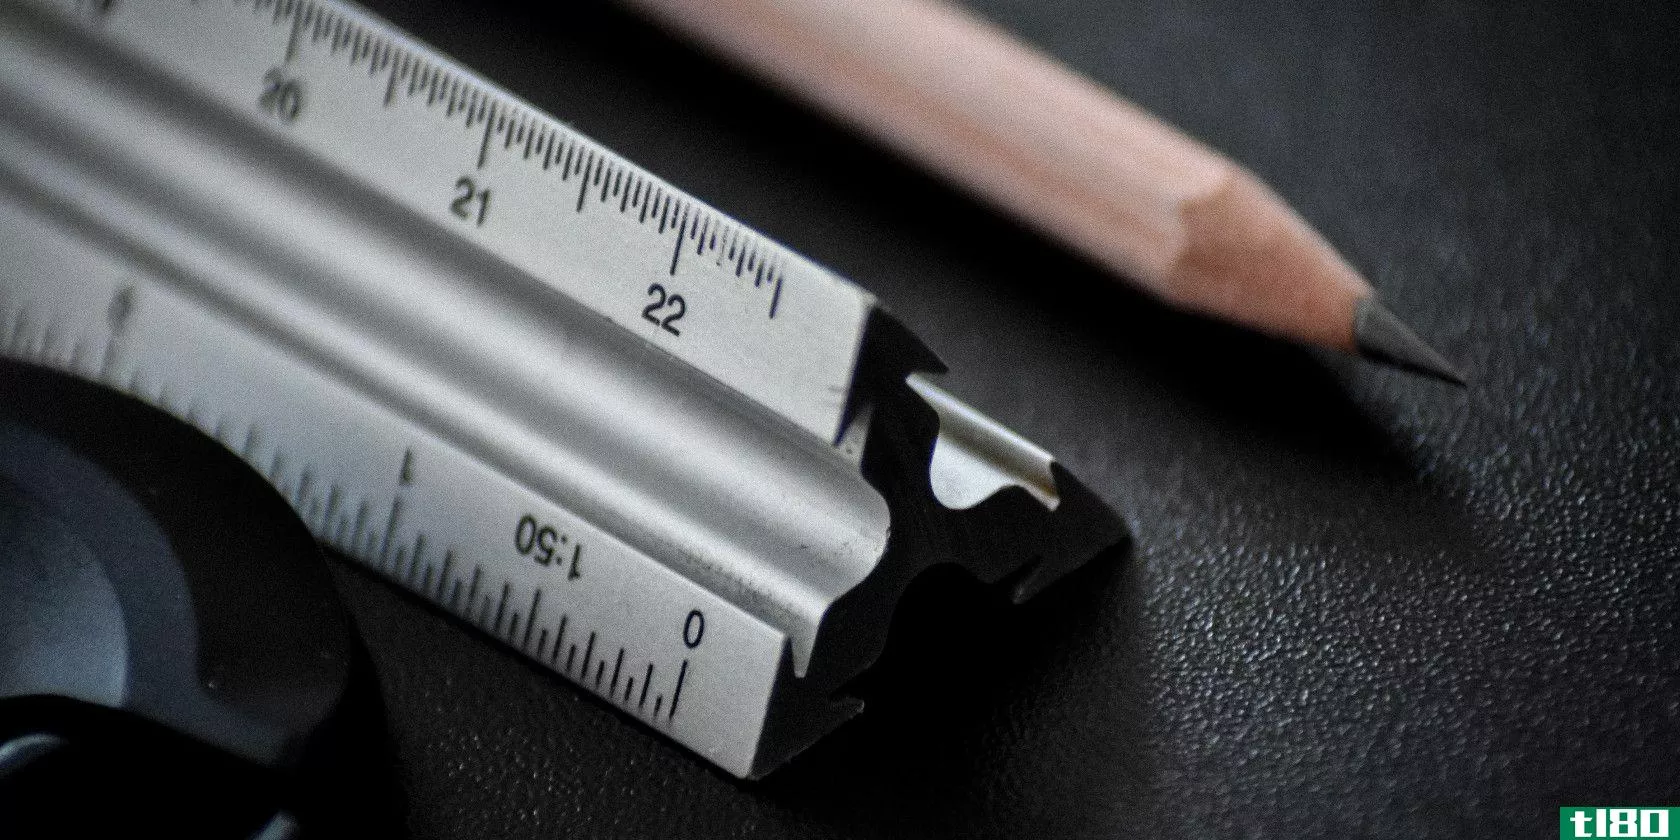 ruler-pencil-measure-digital-devices-featured